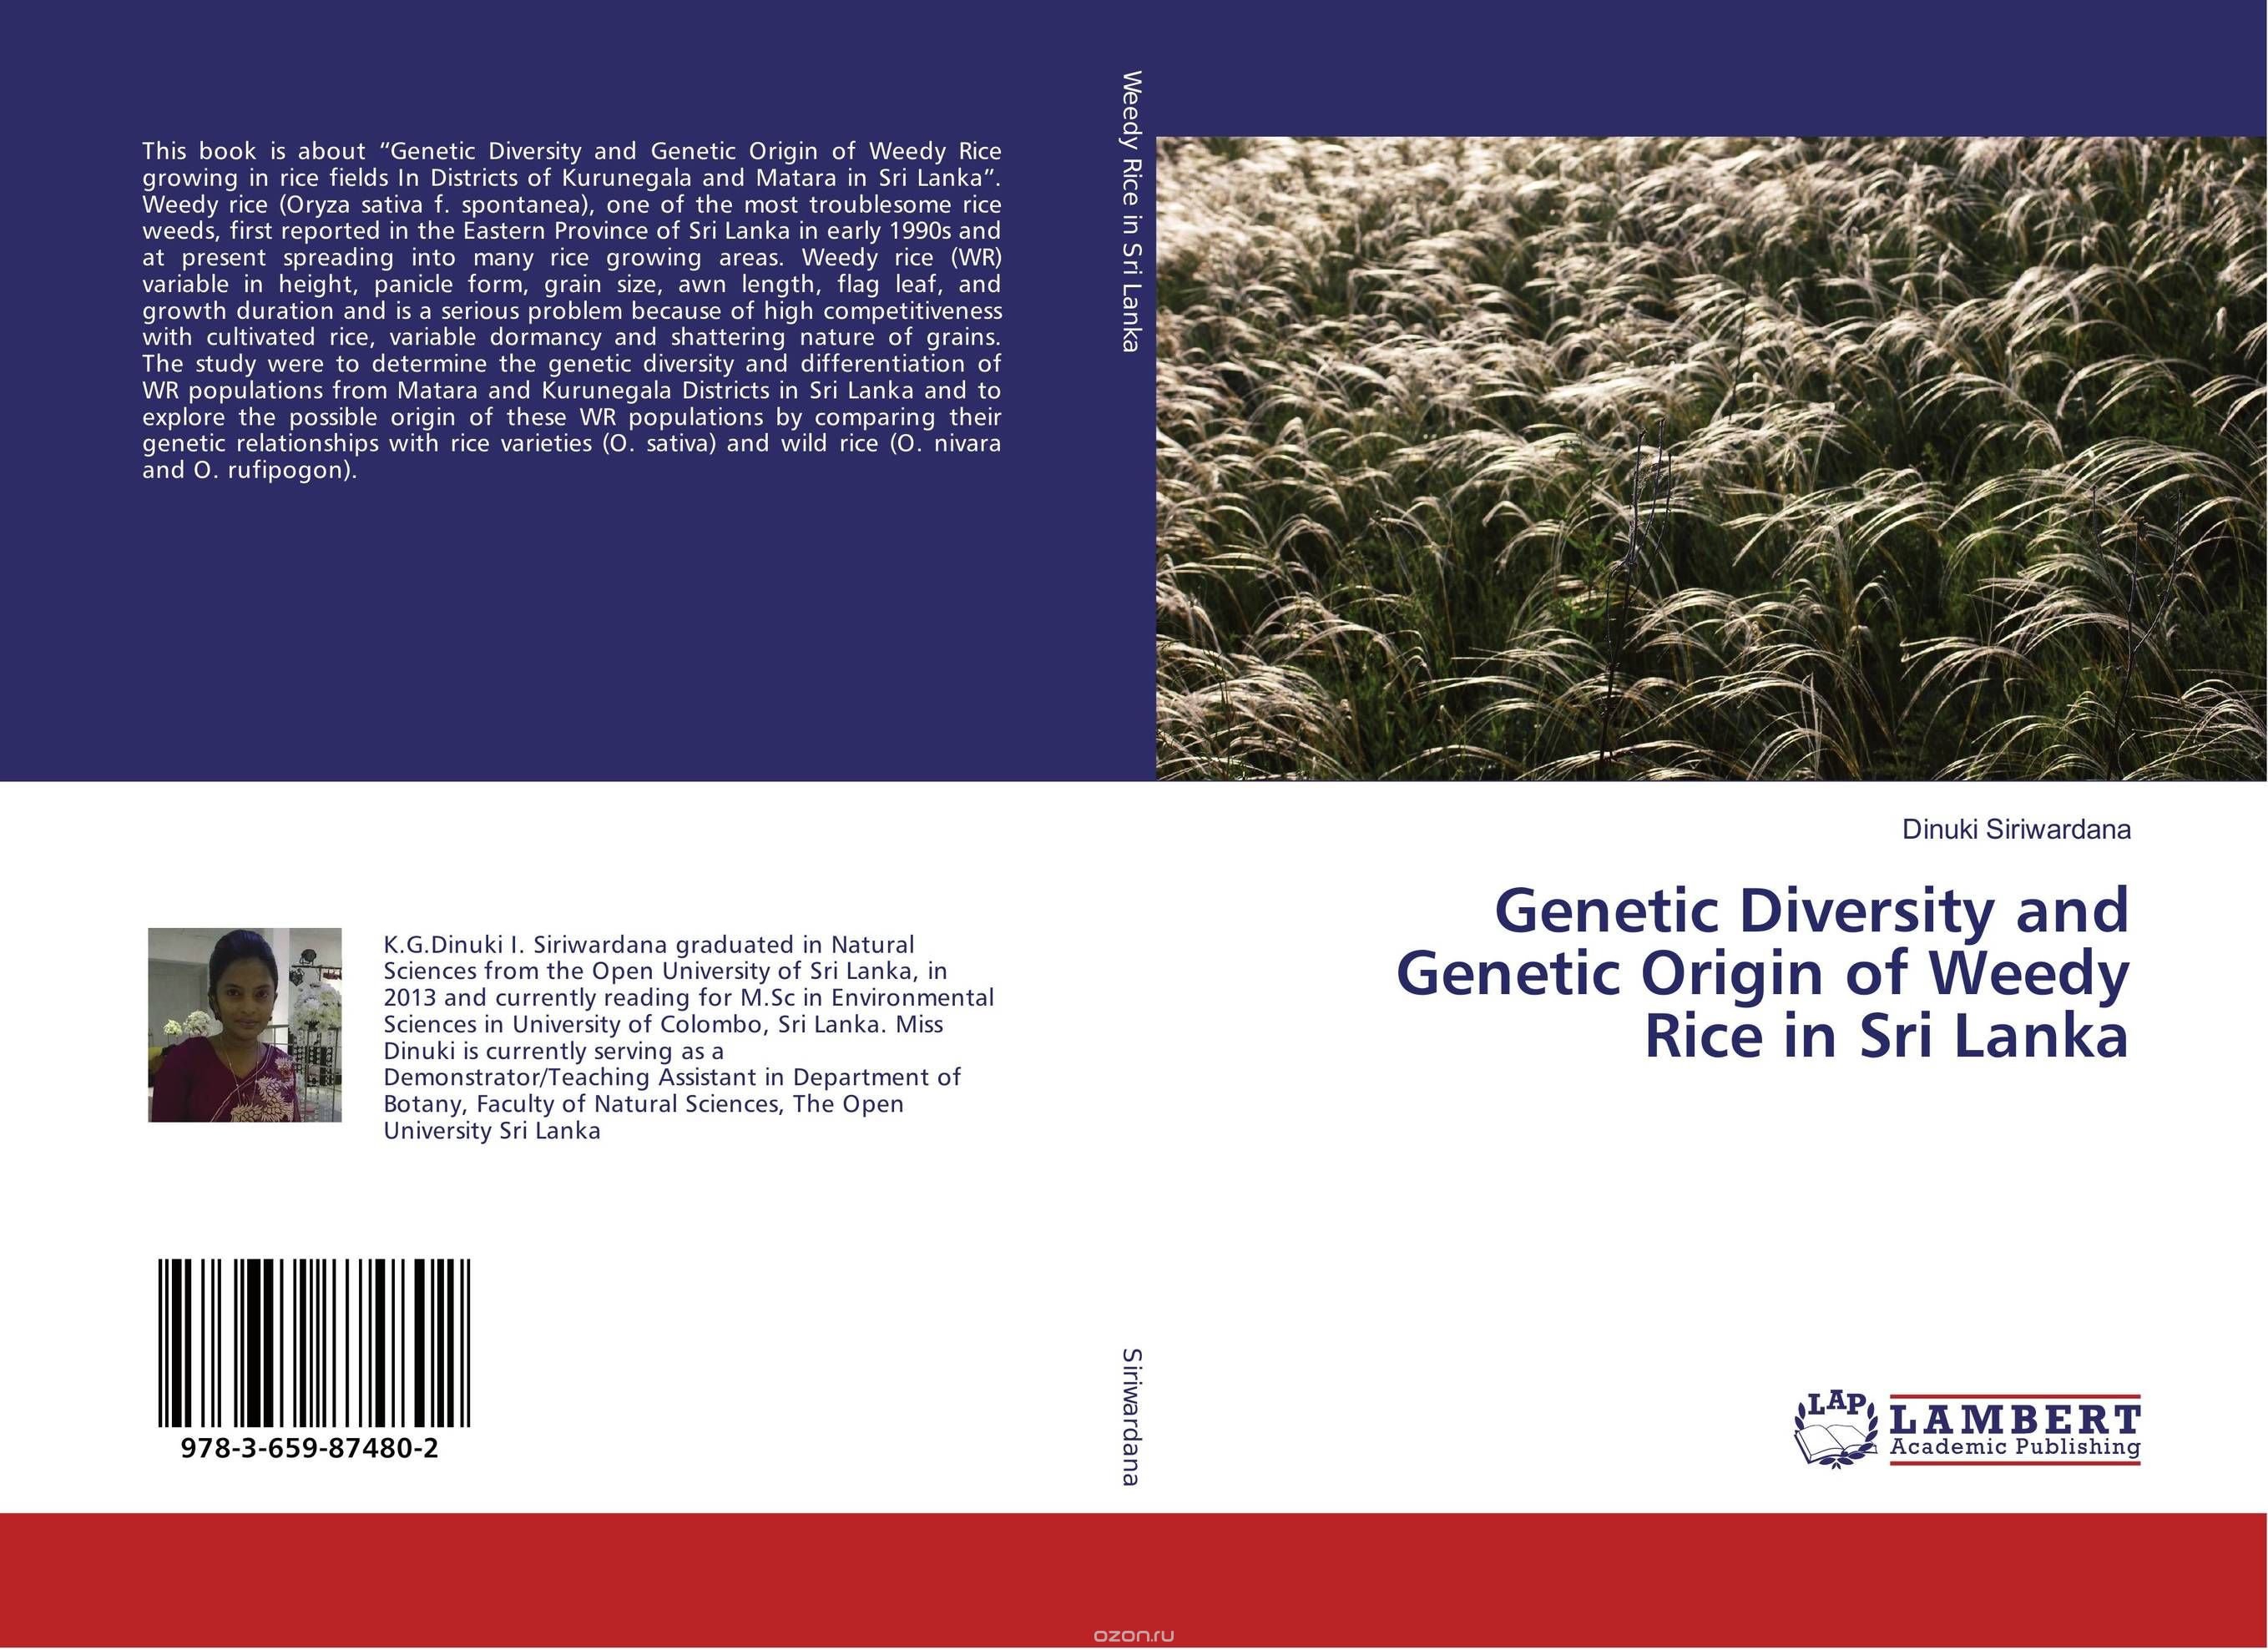 Скачать книгу "Genetic Diversity and Genetic Origin of Weedy Rice in Sri Lanka"